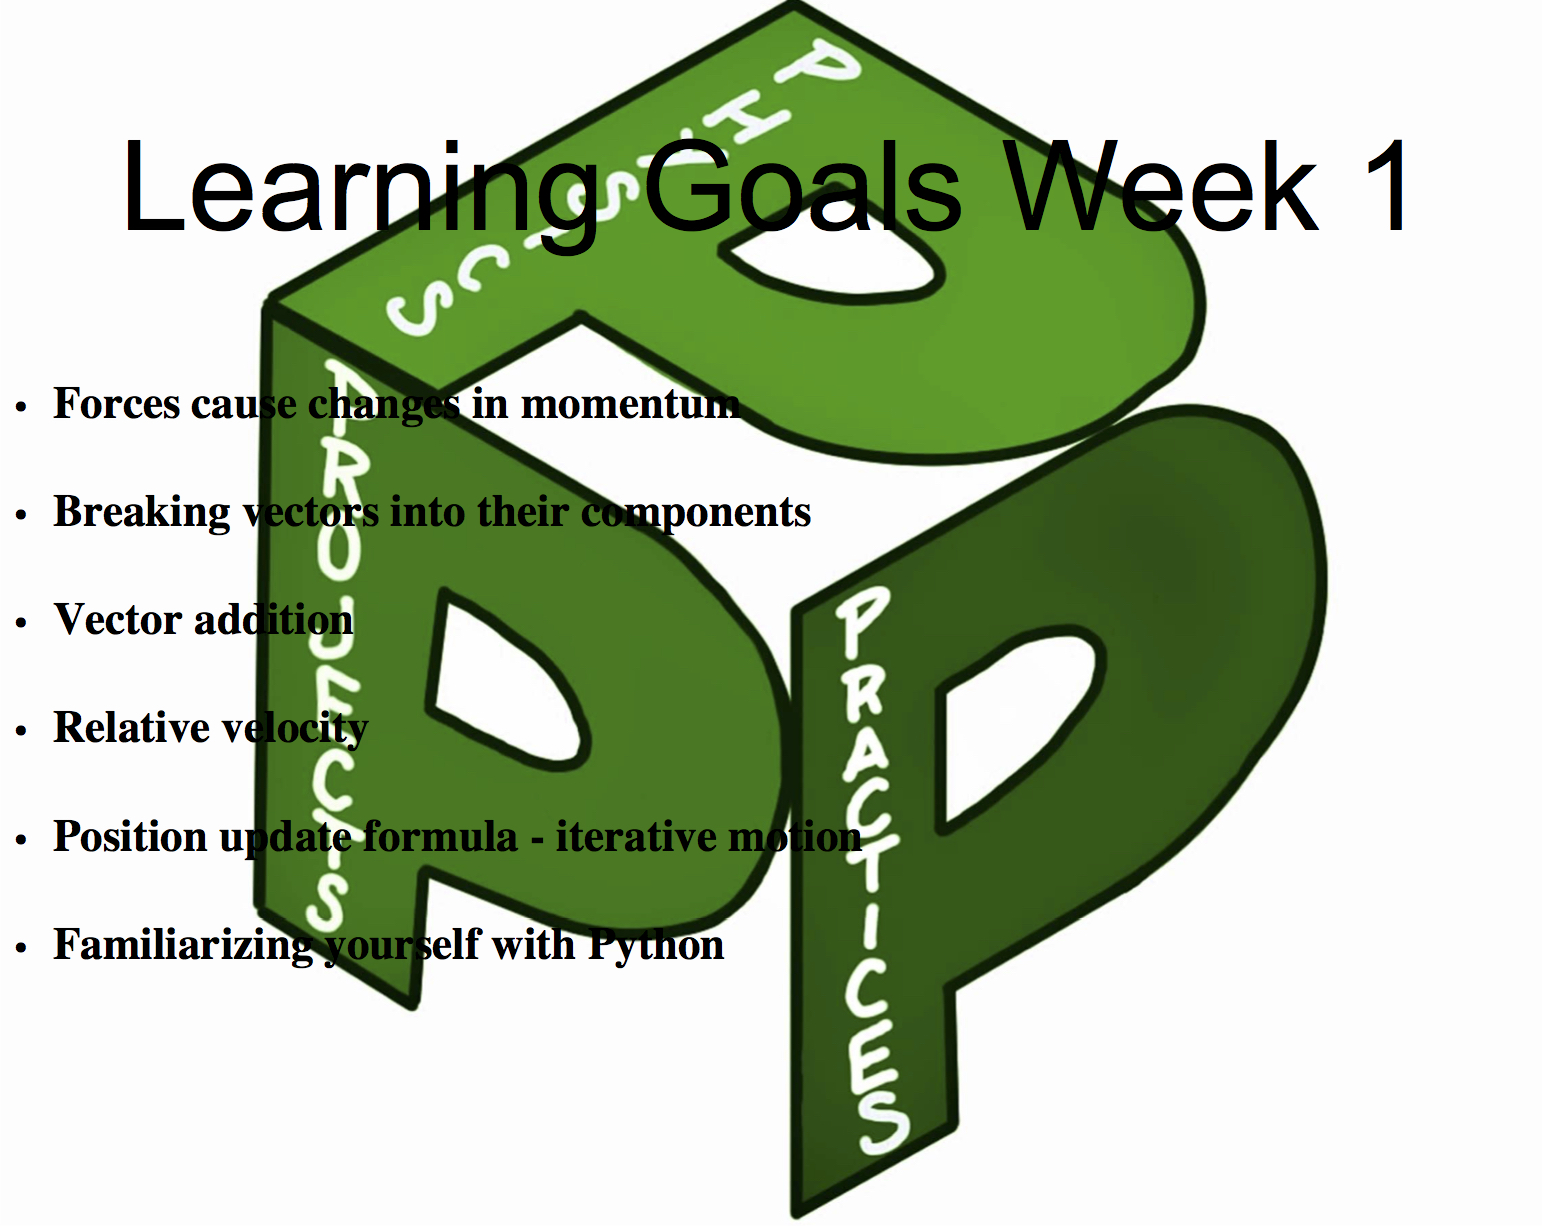 f2016_learning_goals_week_1.jpg